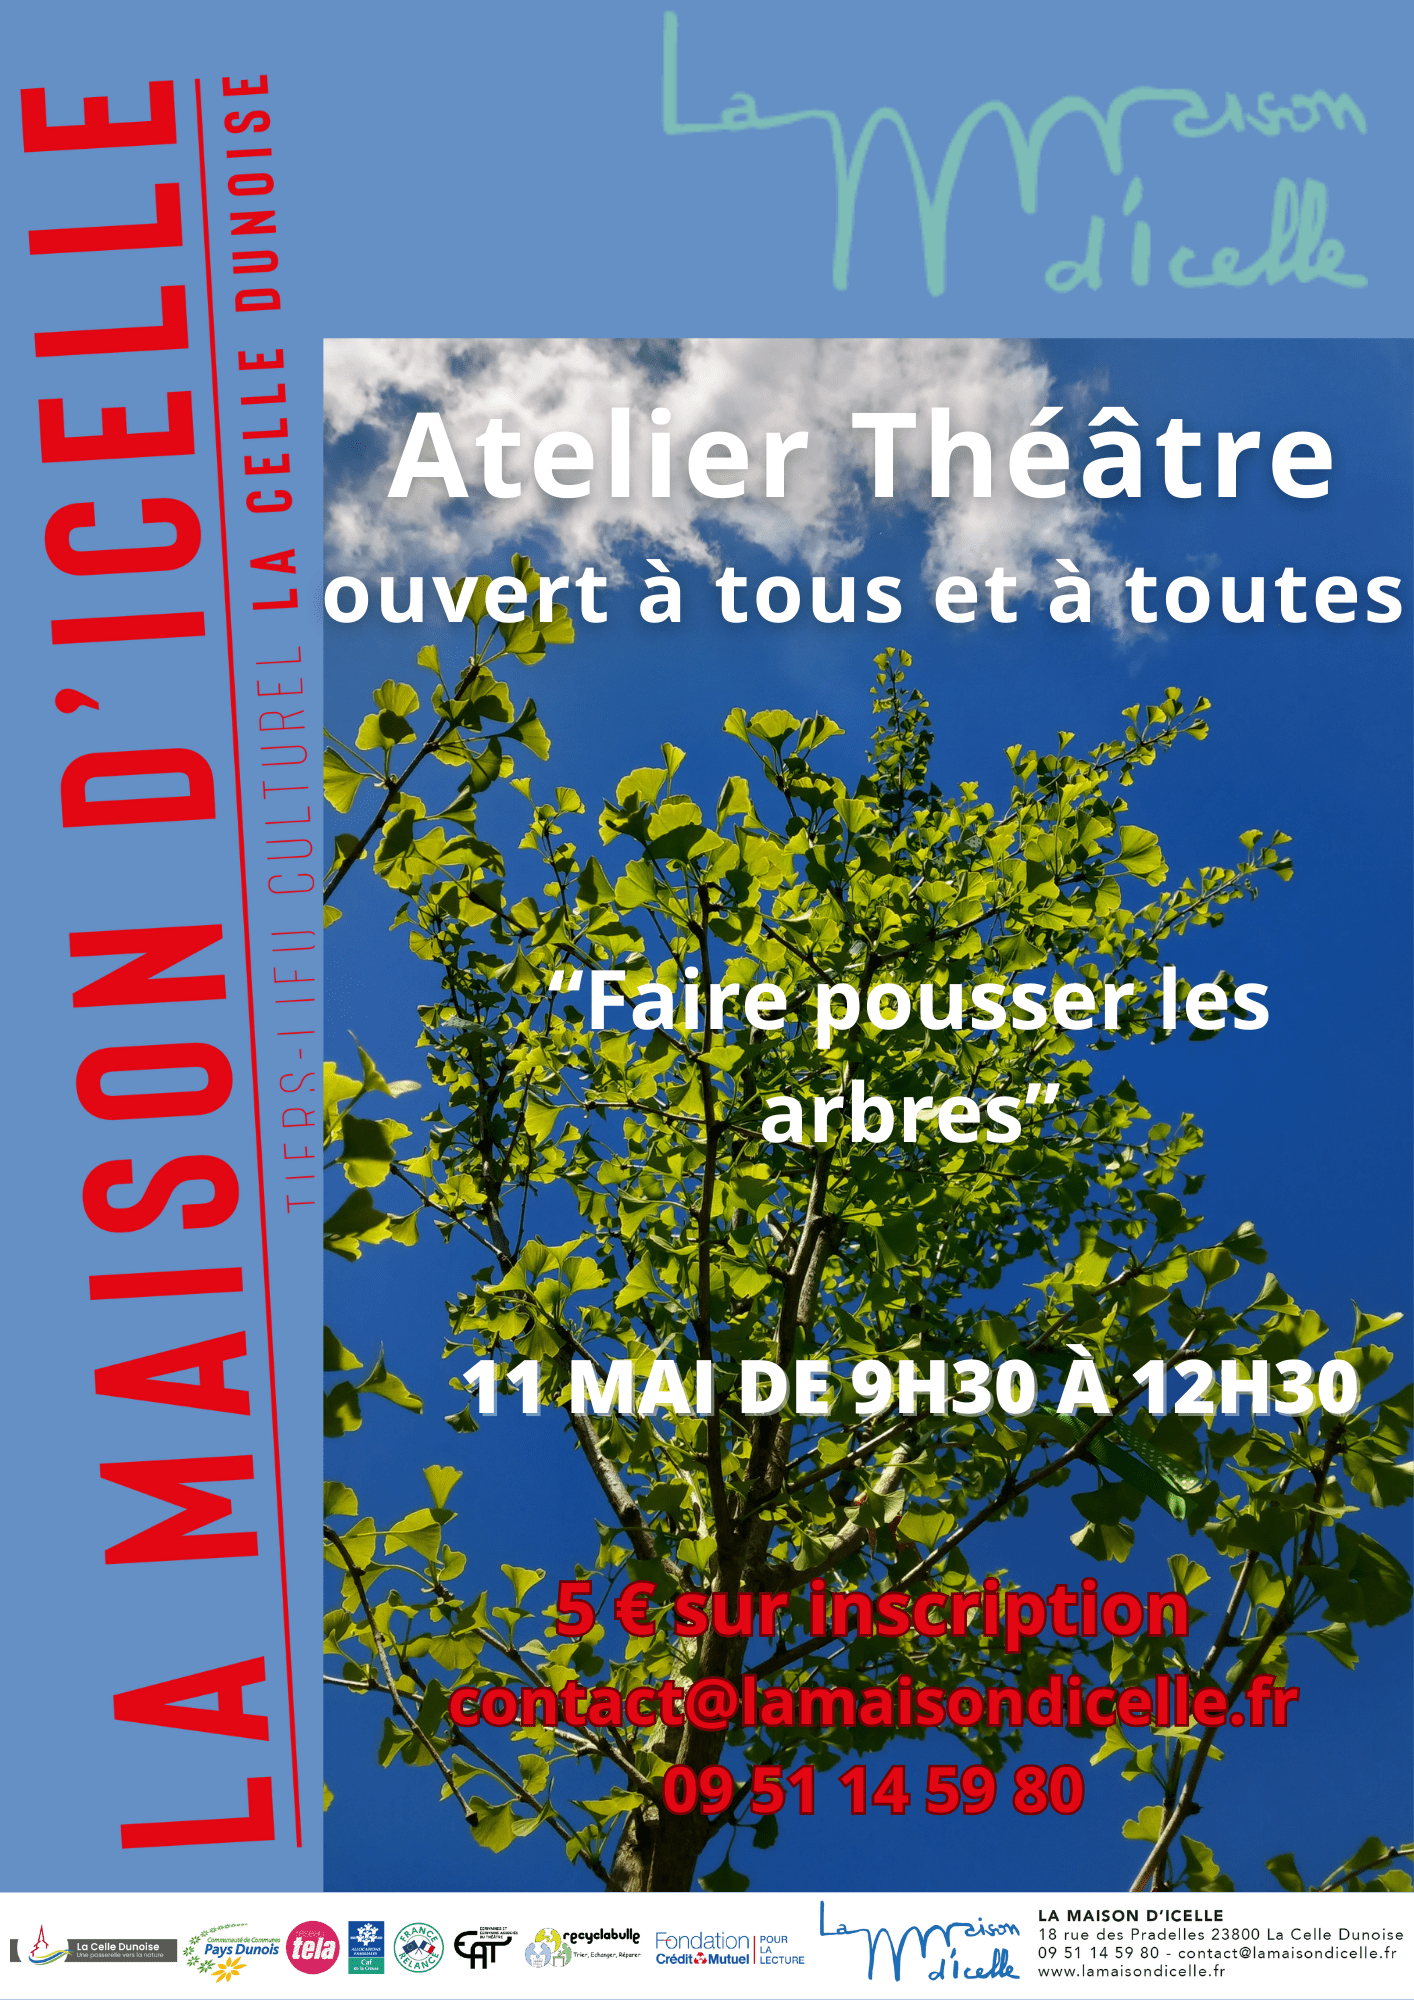 You are currently viewing Sam 11 mai de 9h30 à 12h30 Atelier Théâtre